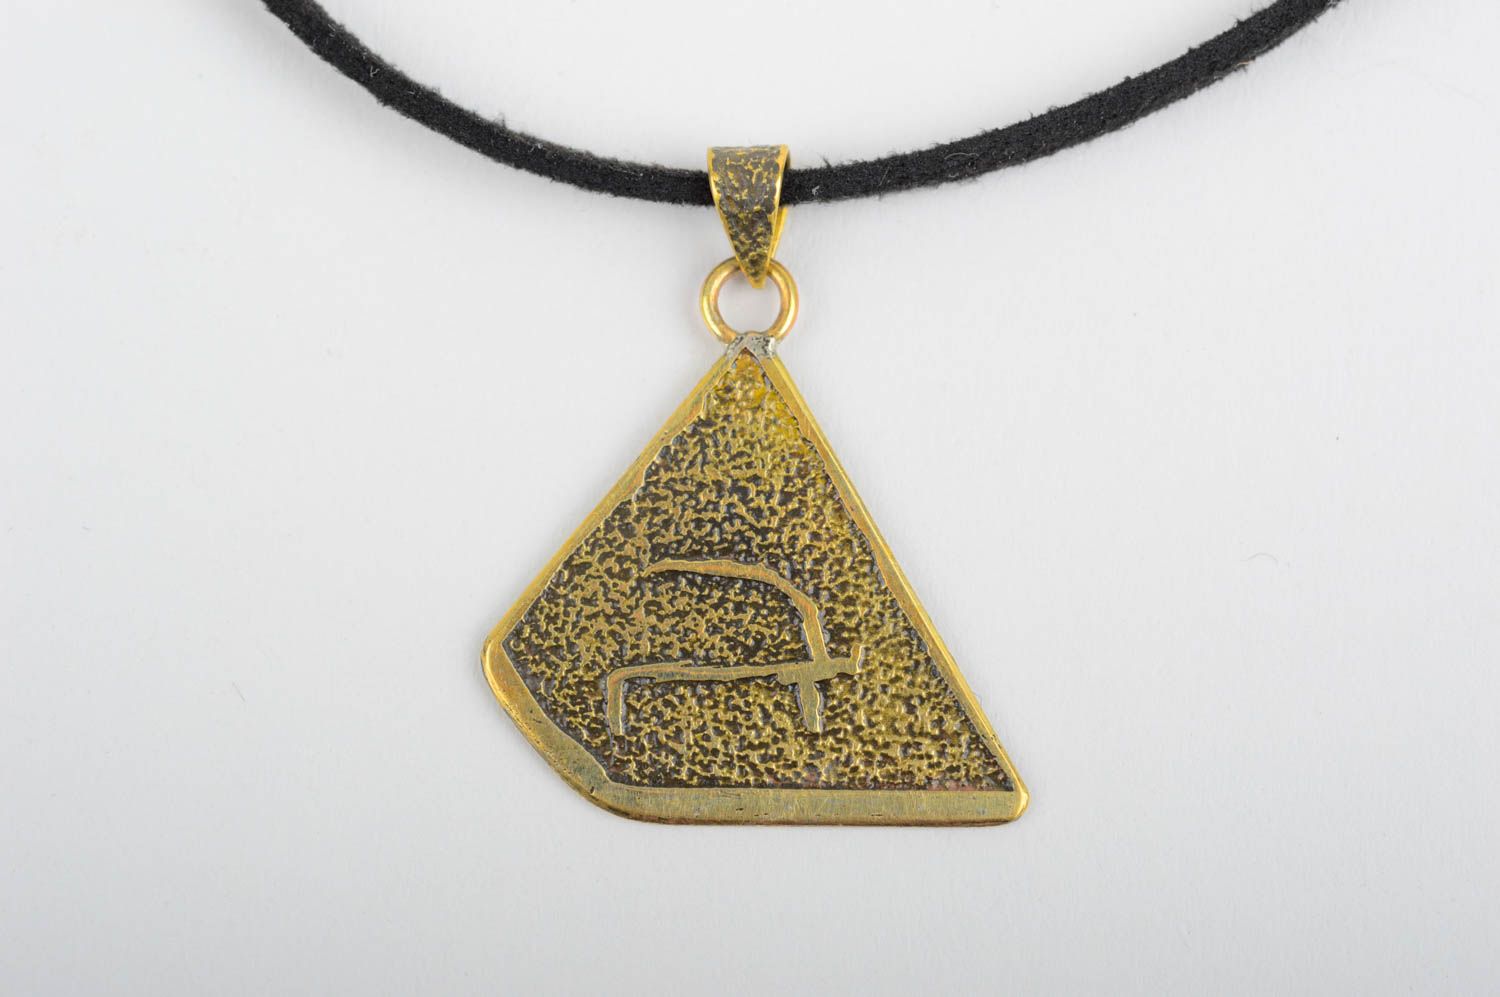 Handmade pendant unusual accessory brass jewelry unusual pendant gift for her photo 4